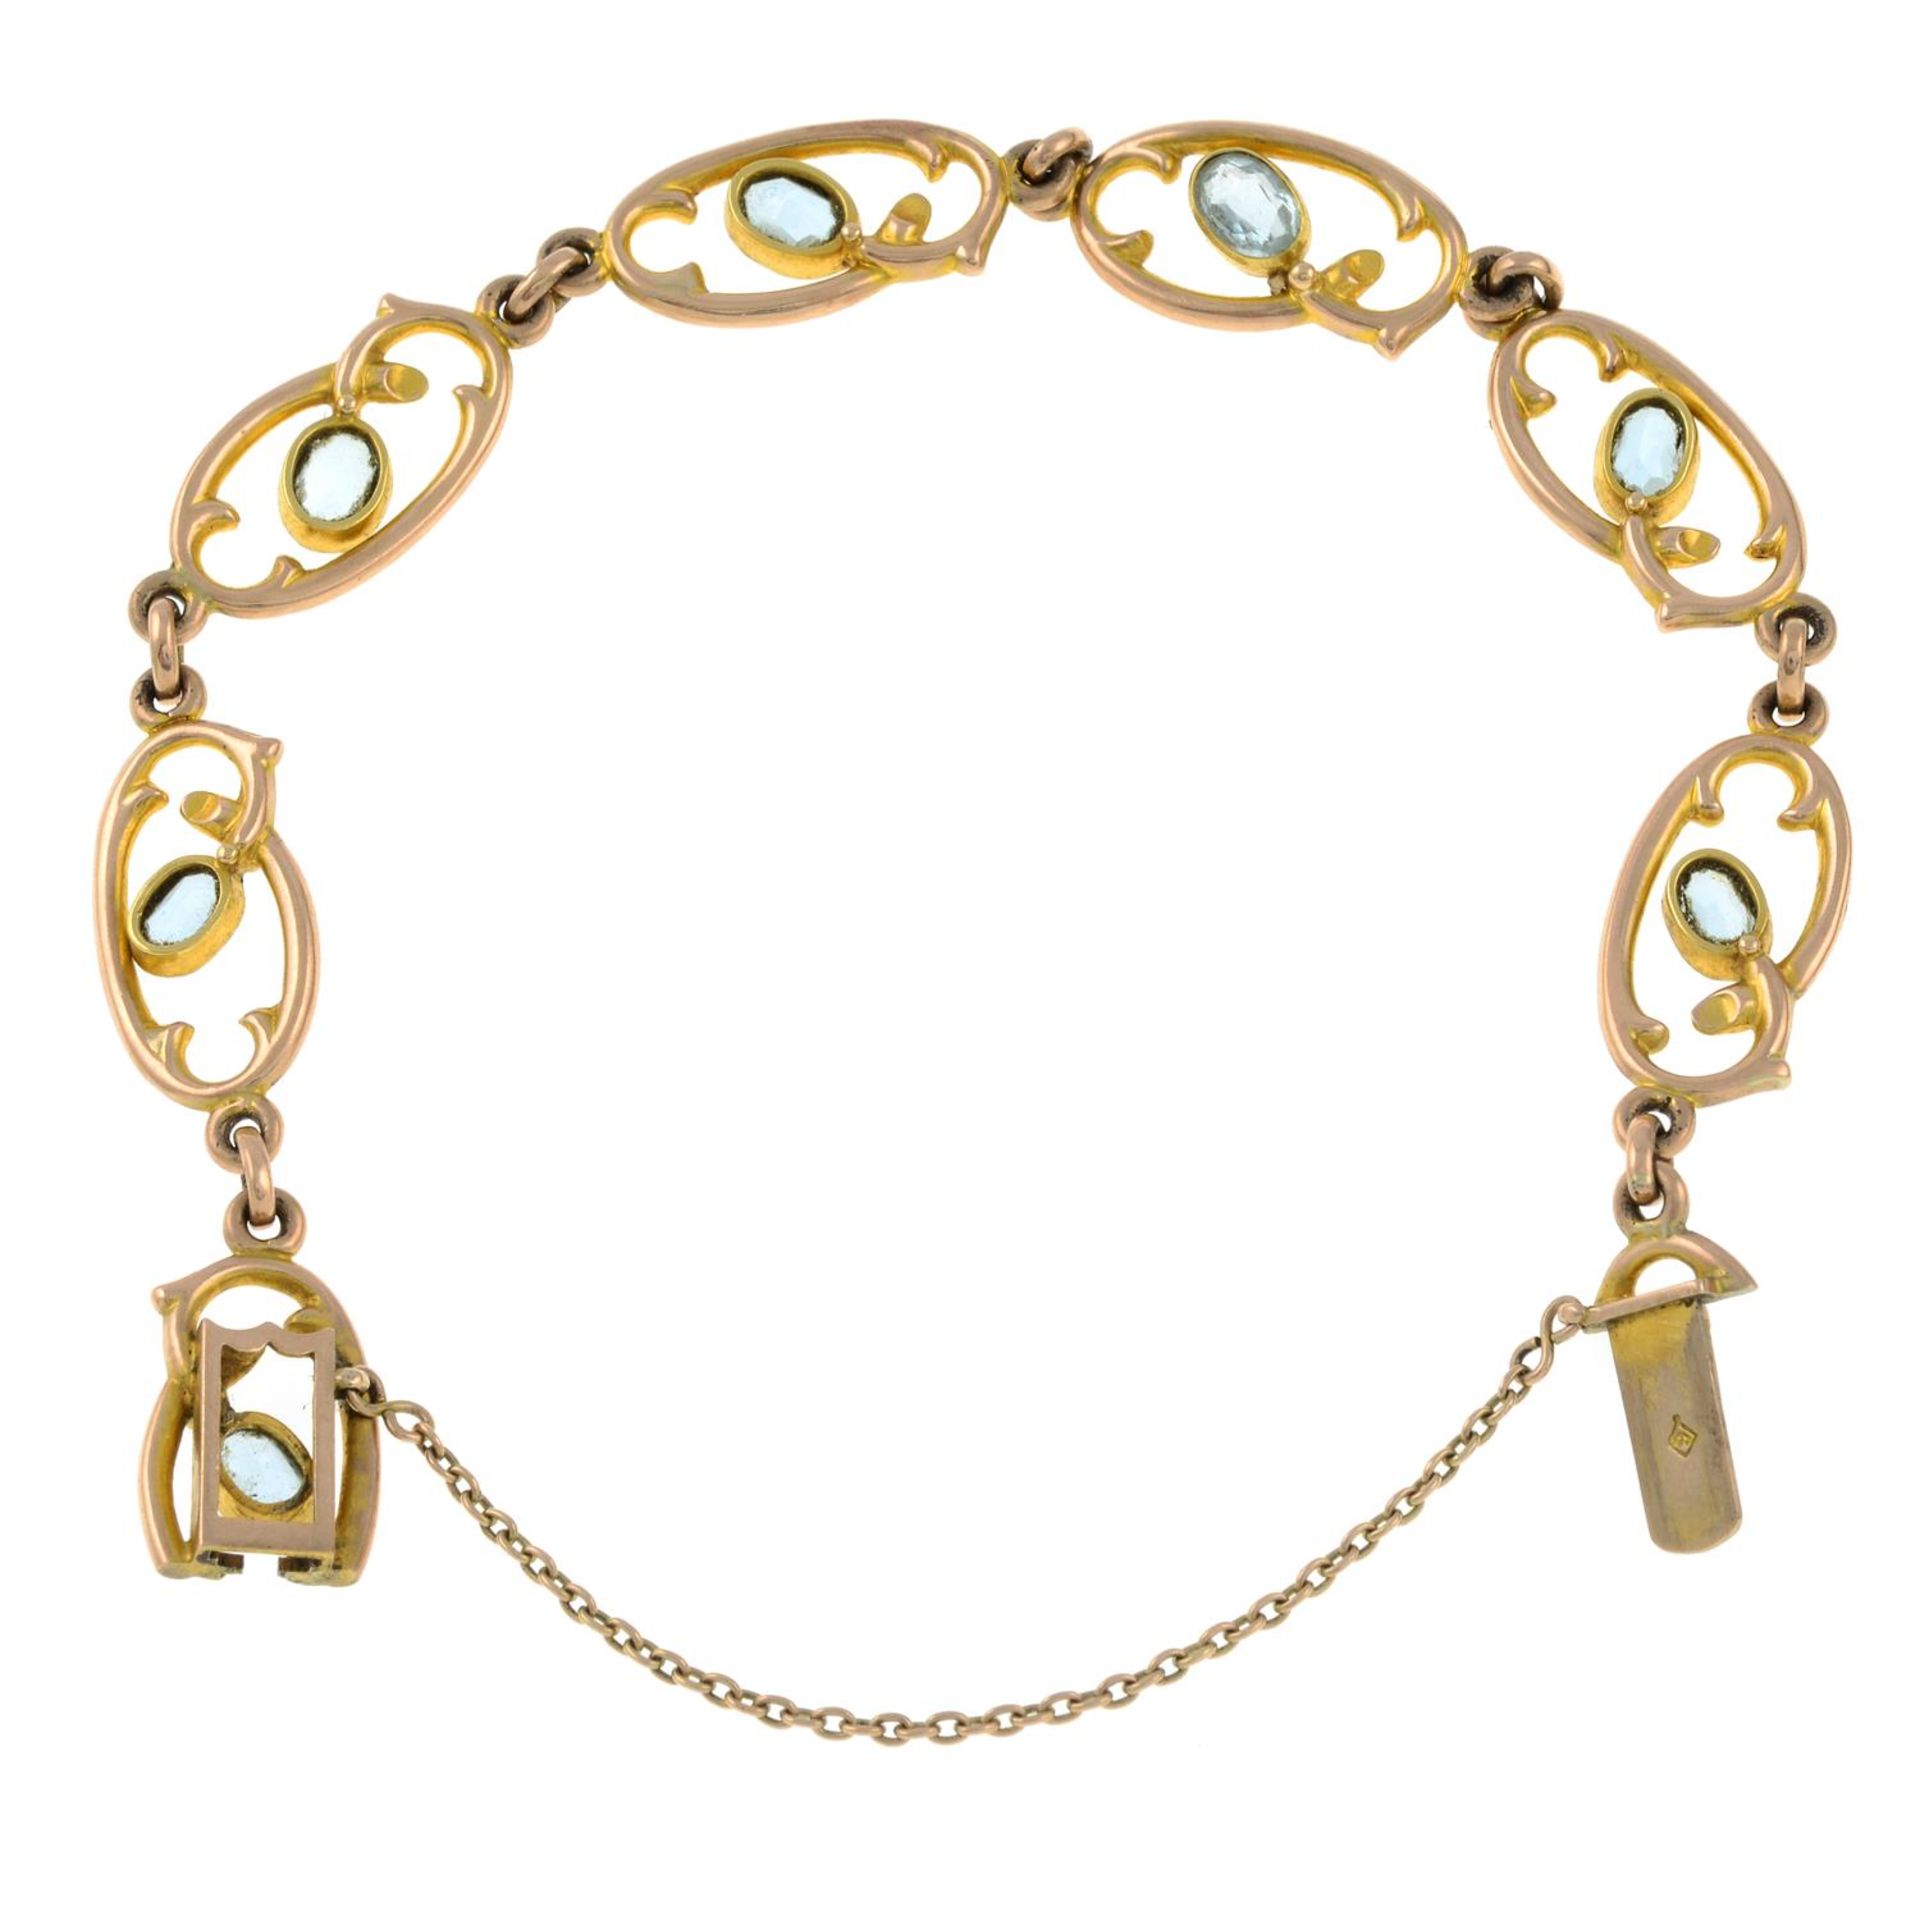 An early 20th century aquamarine bracelet. - Image 2 of 2